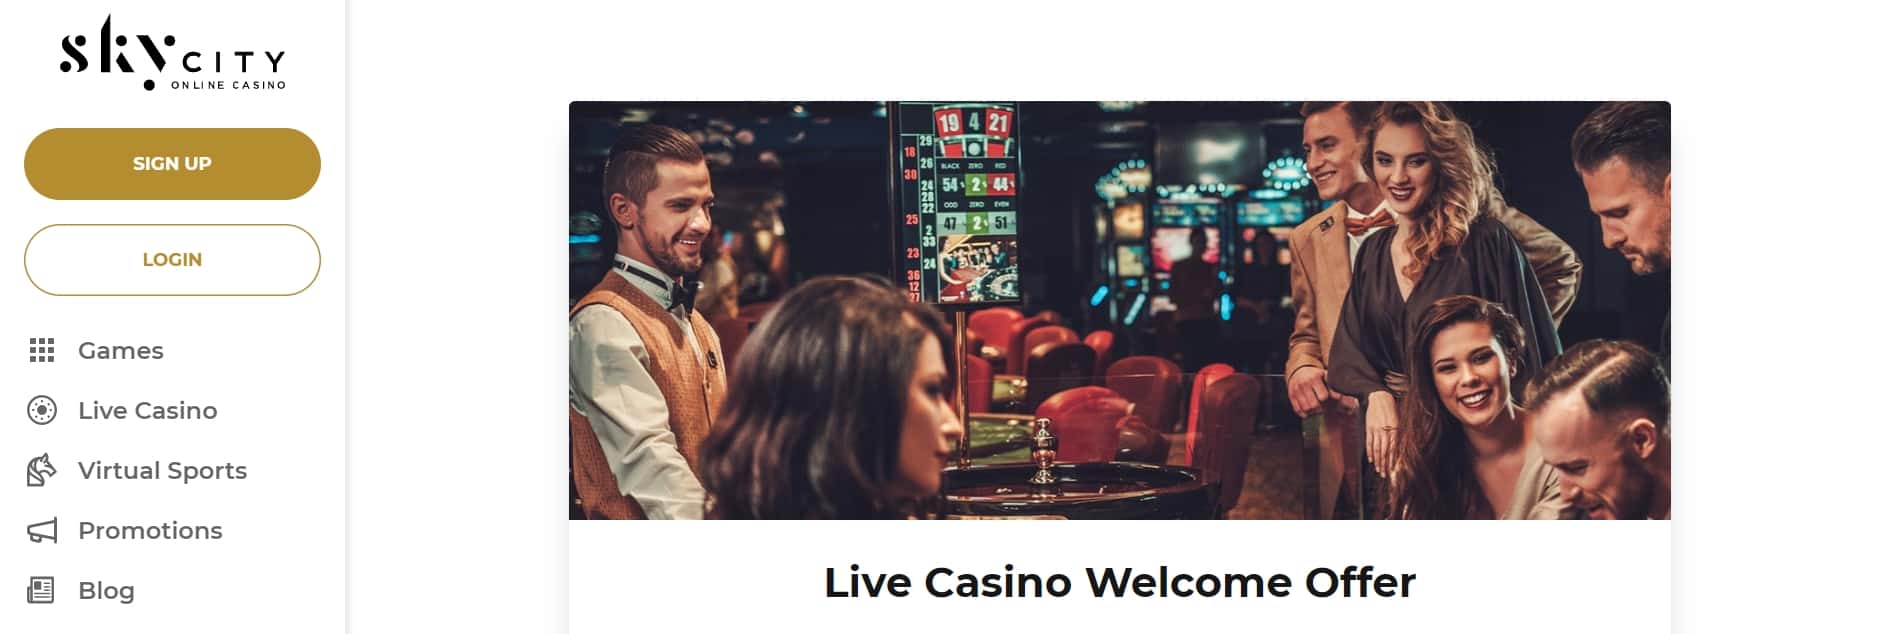 SkyCity Online Live Casino Welcome Offer